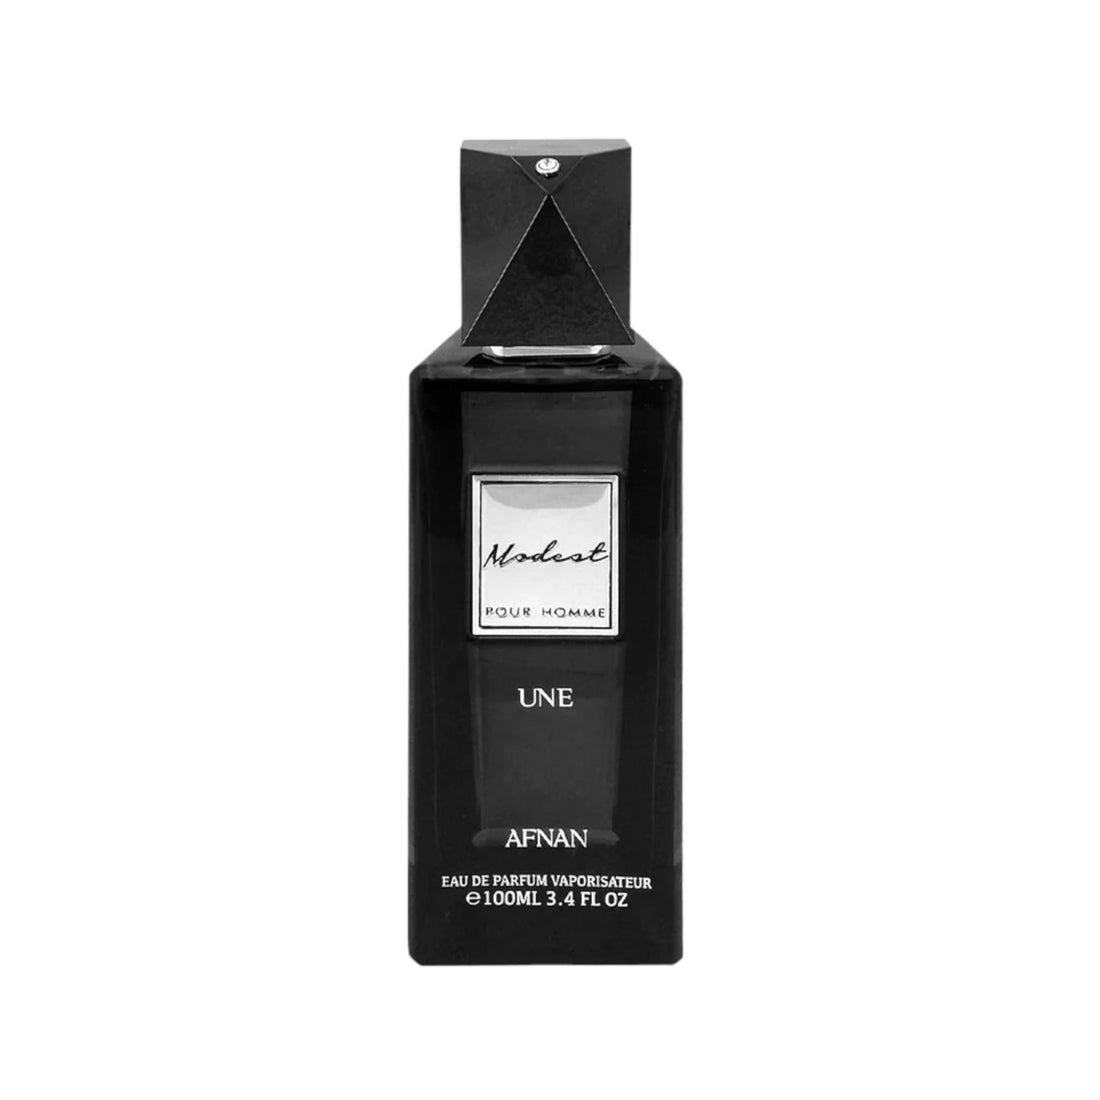 Sleek 100ml bottle of Afnan Modest Pour Homme Eau De Parfum, symbolizing its modern and masculine fragrance.